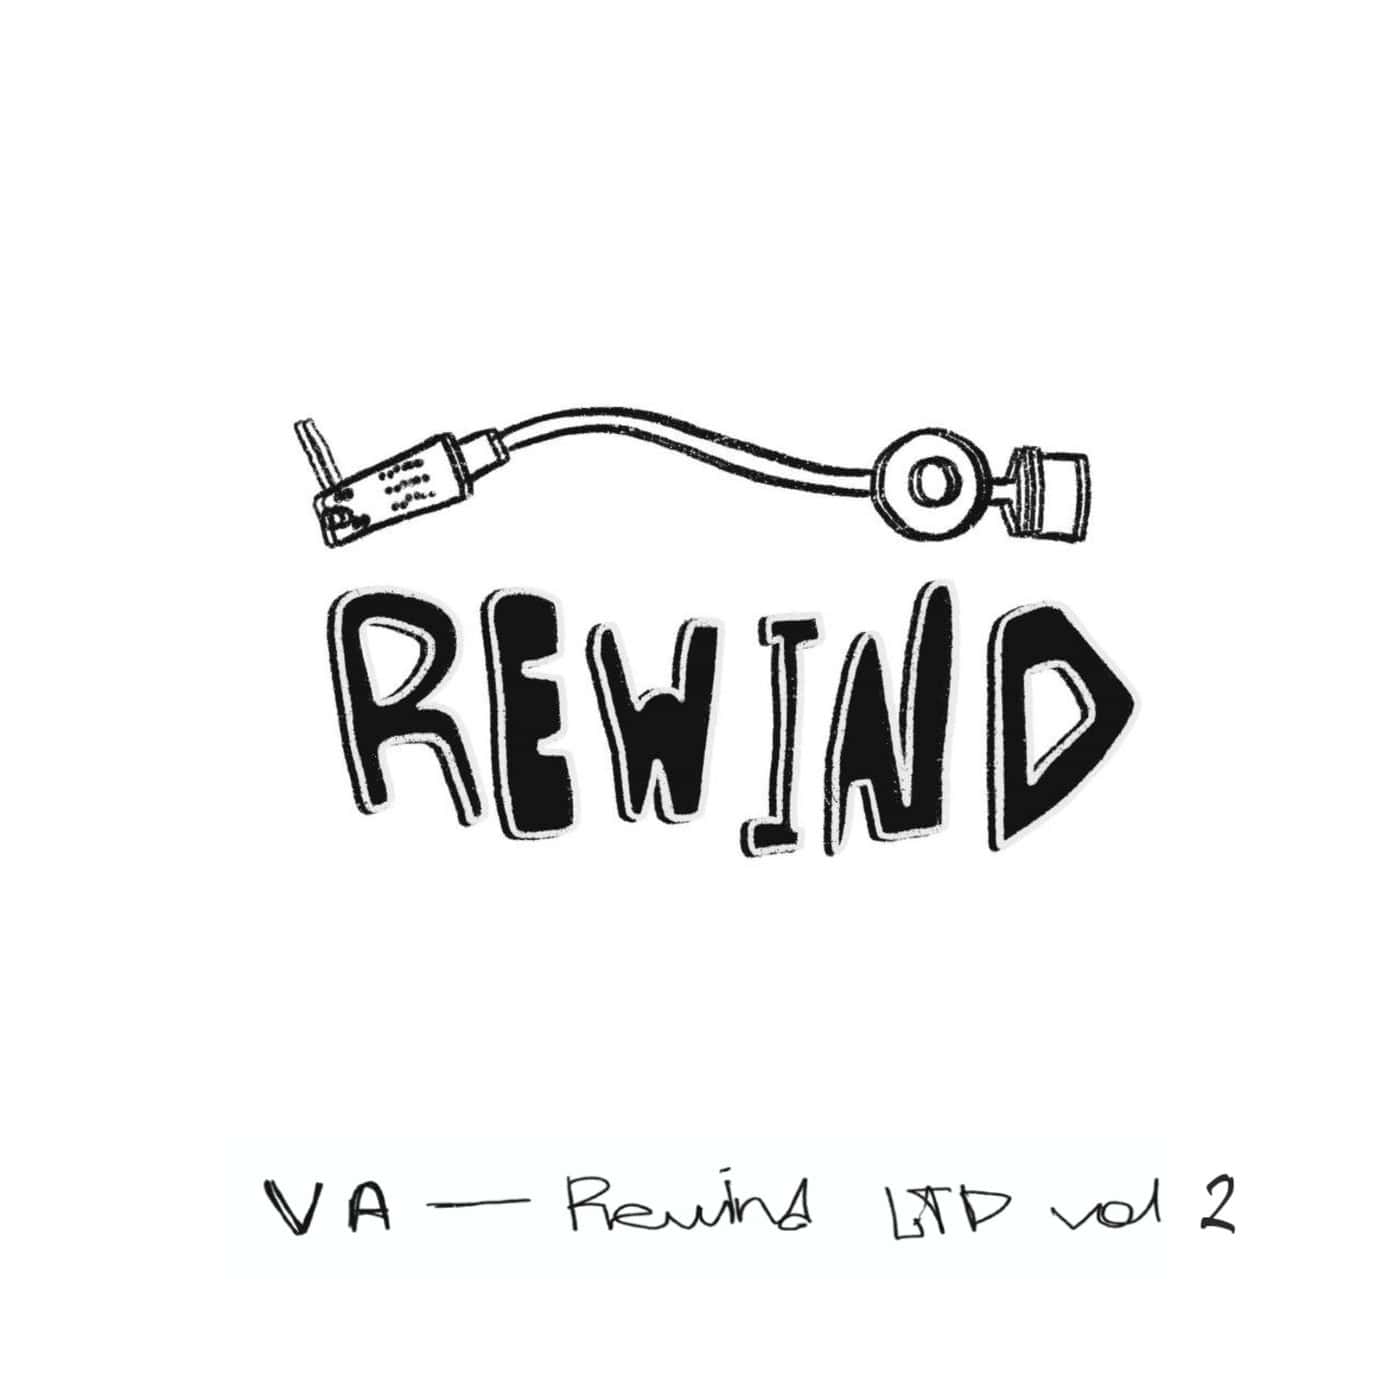 Download VA - Rewind Ltd, Vol. 2 on Electrobuzz